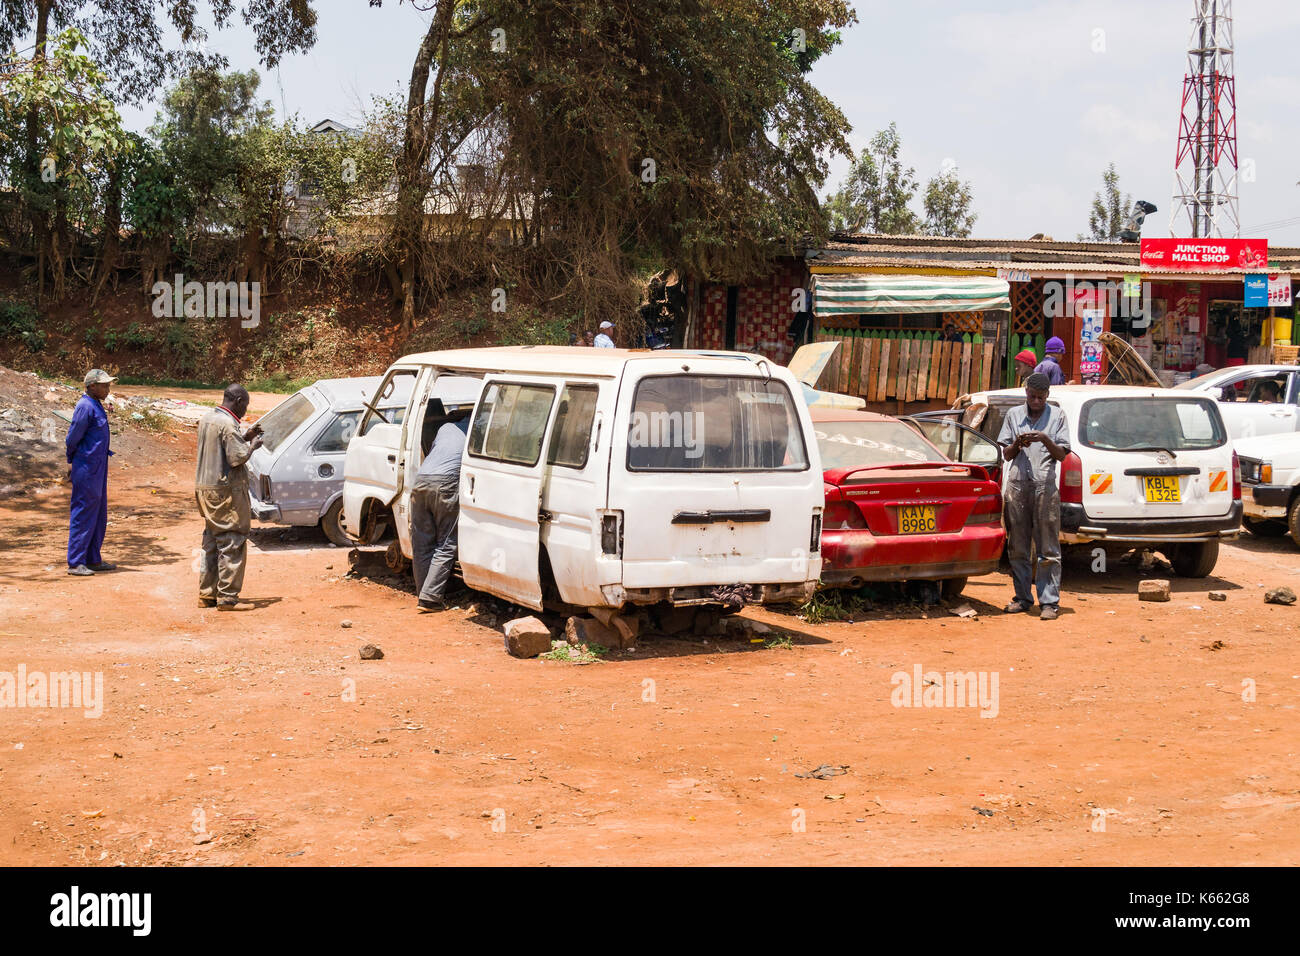 Mechanics working on vehicles by roadside, Kenya Stock Photo